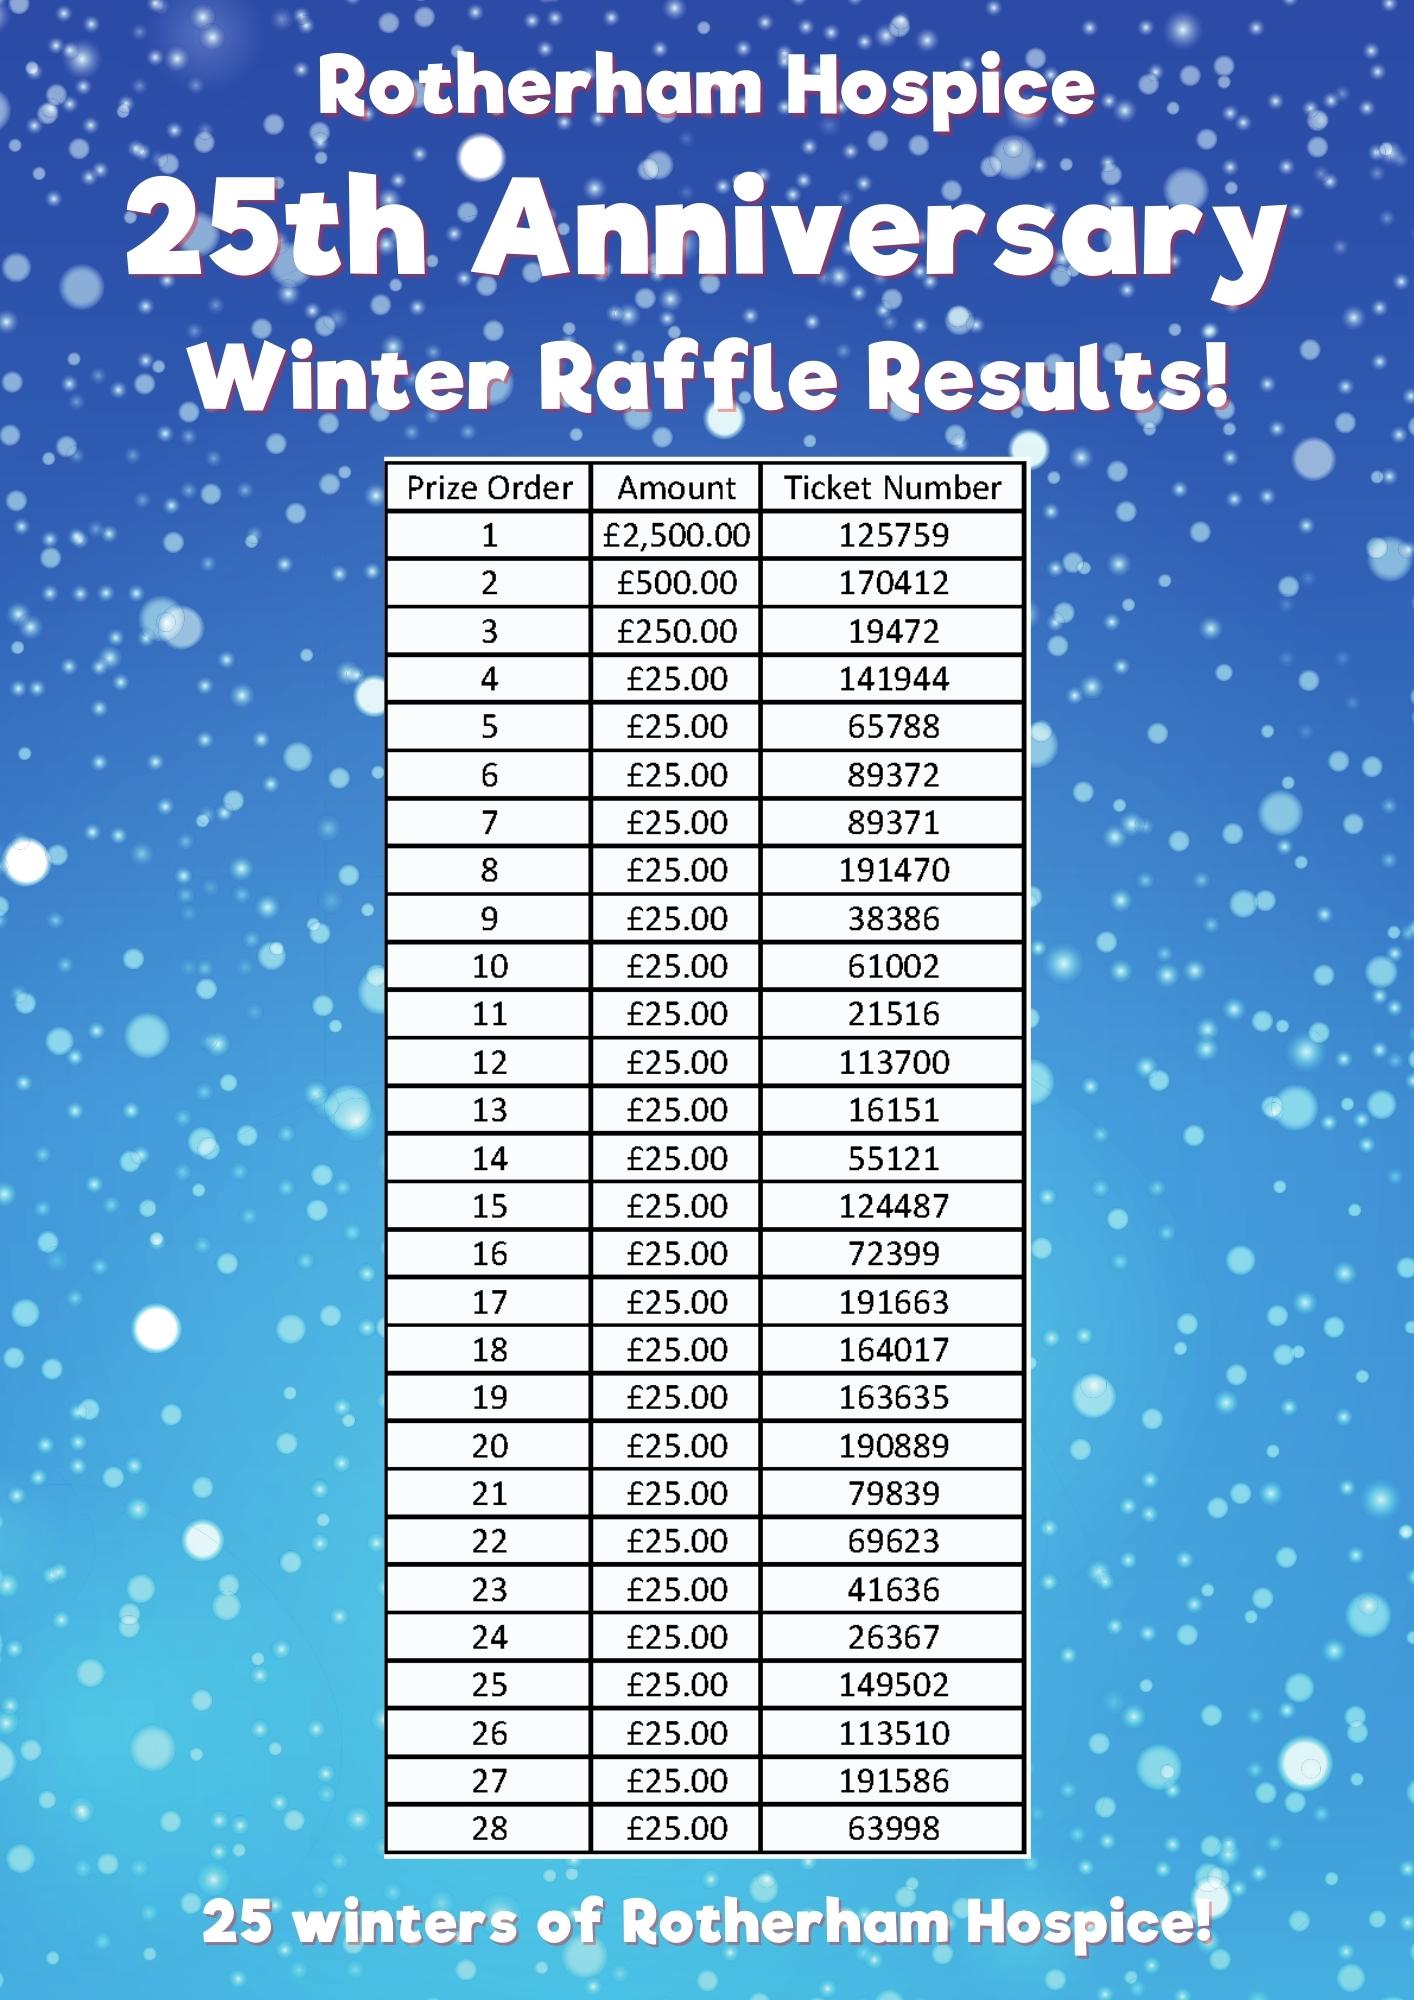 Winter Raffle Results - Rotherham Hospice